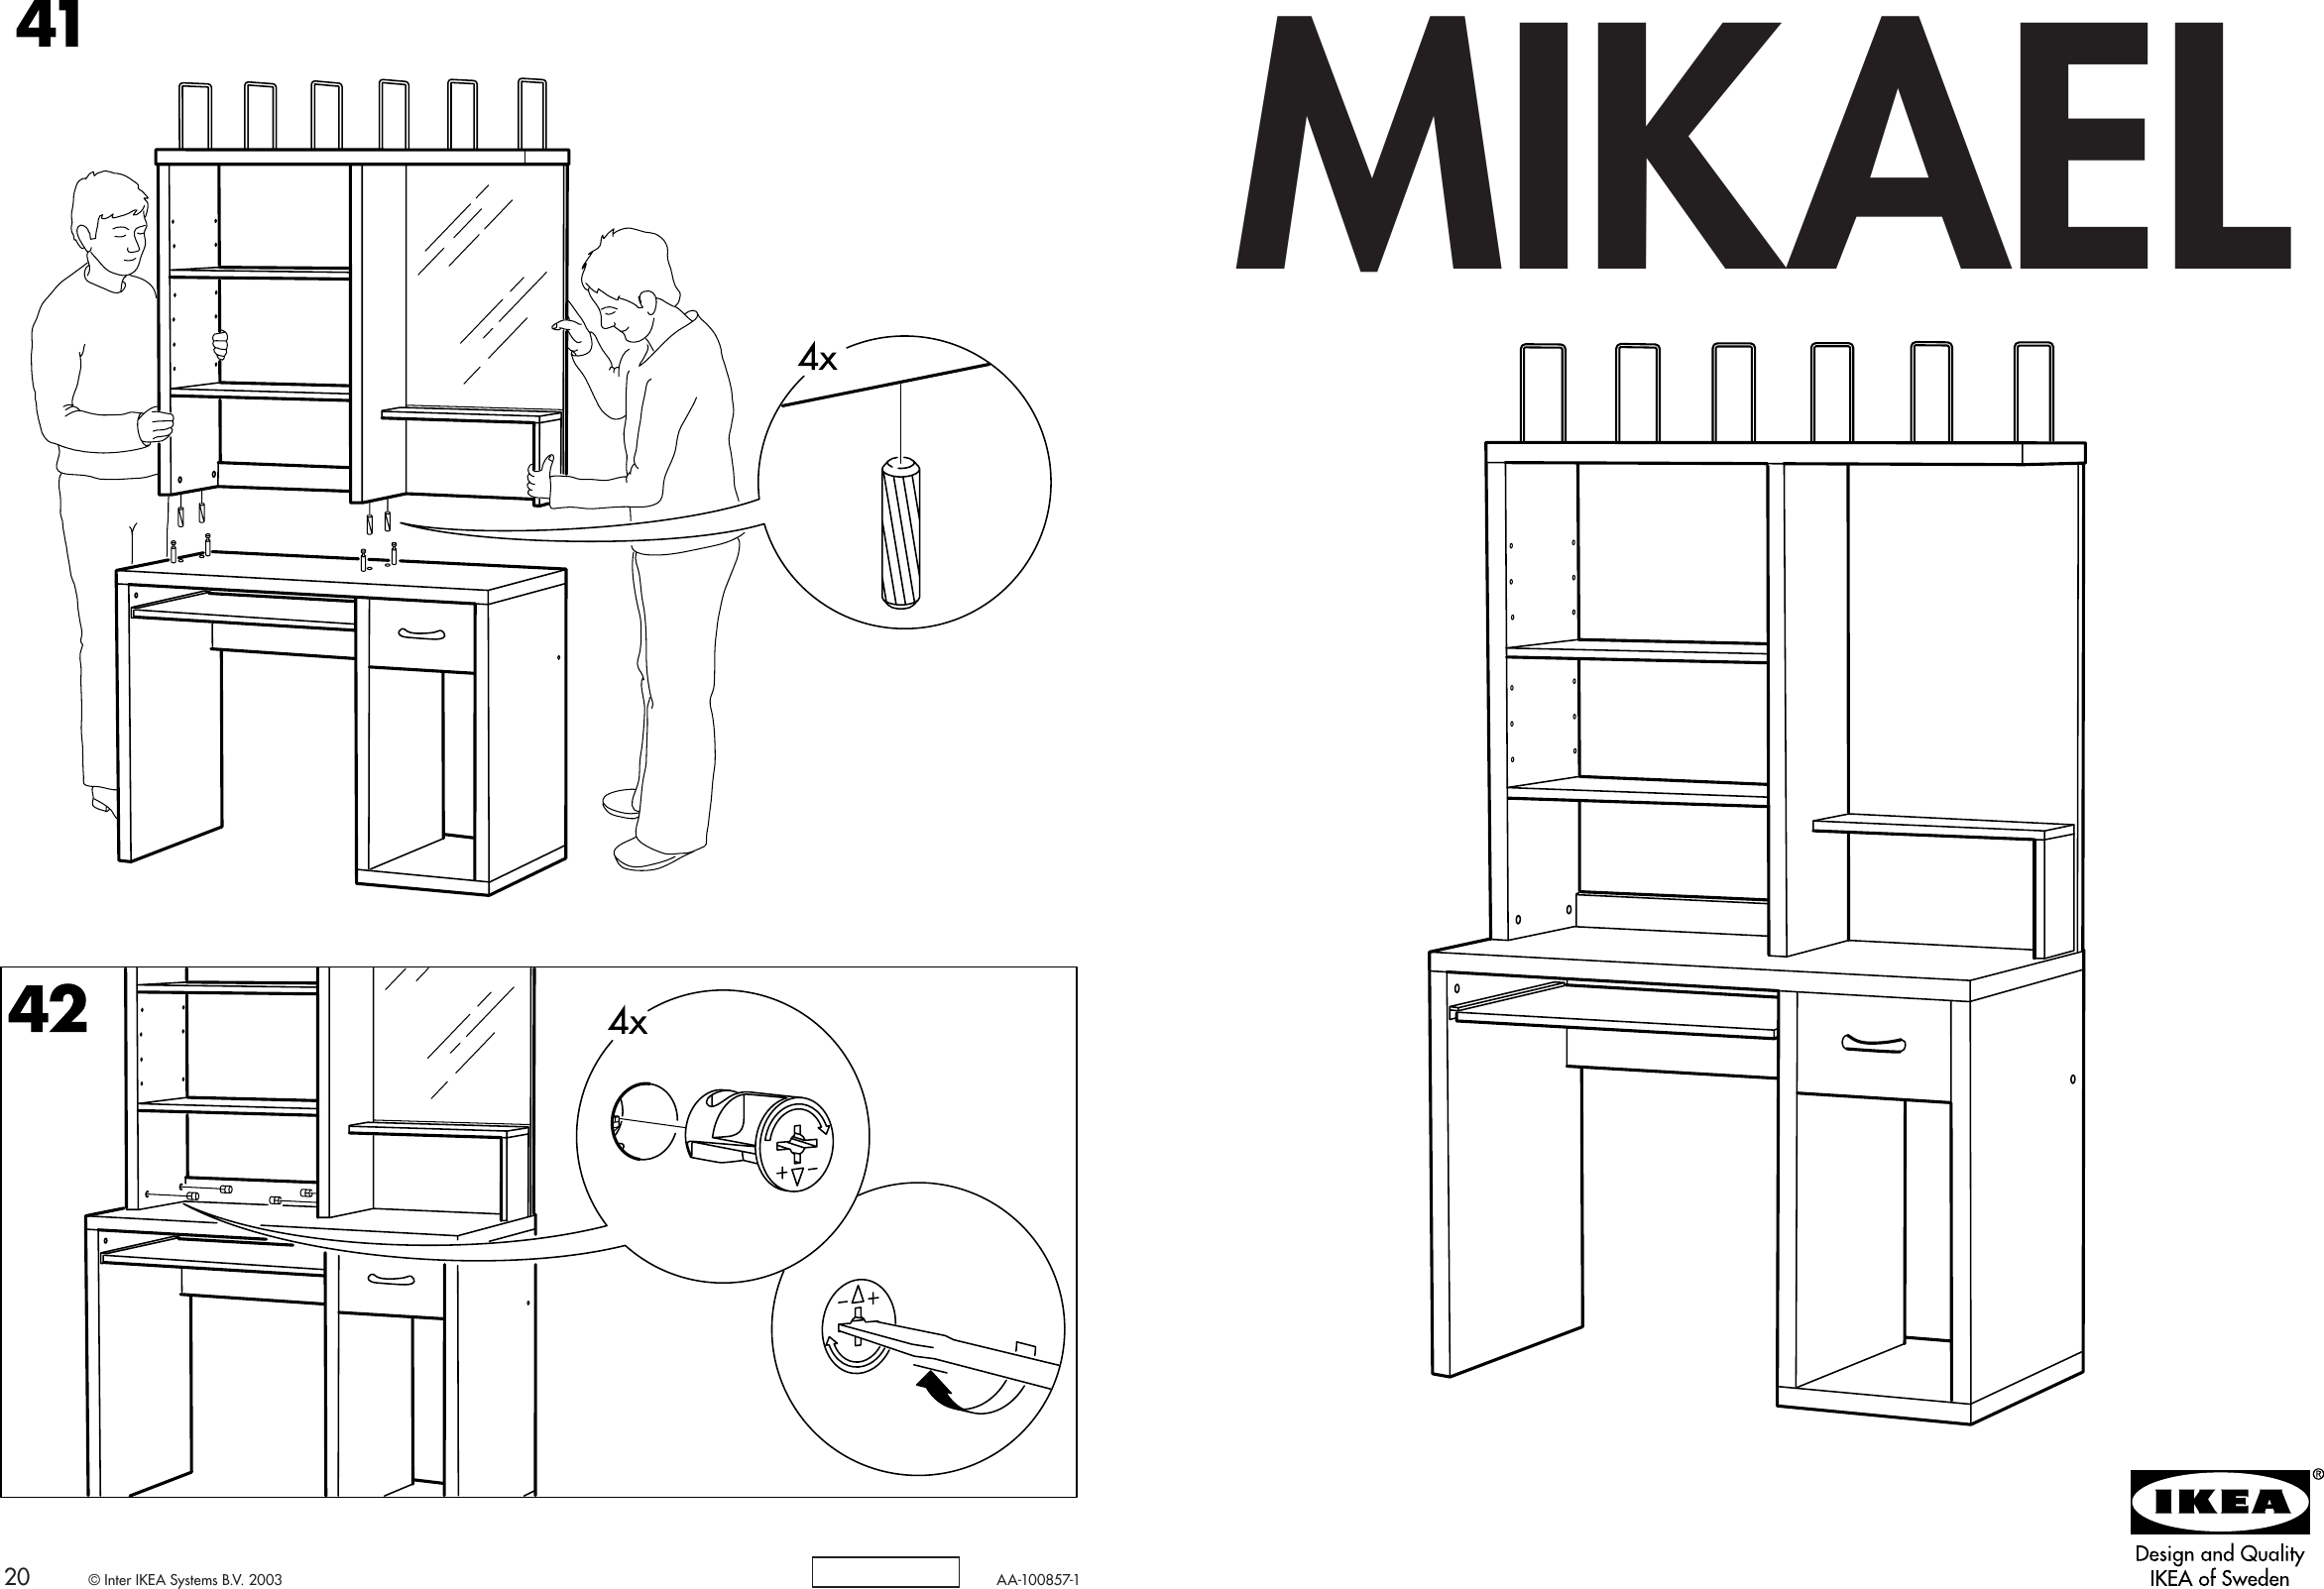 Page 1 of 10 - Ikea Ikea-Mikael-Computer-Workstation-41X20-Assembly-Instruction-2  Ikea-mikael-computer-workstation-41x20-assembly-instruction